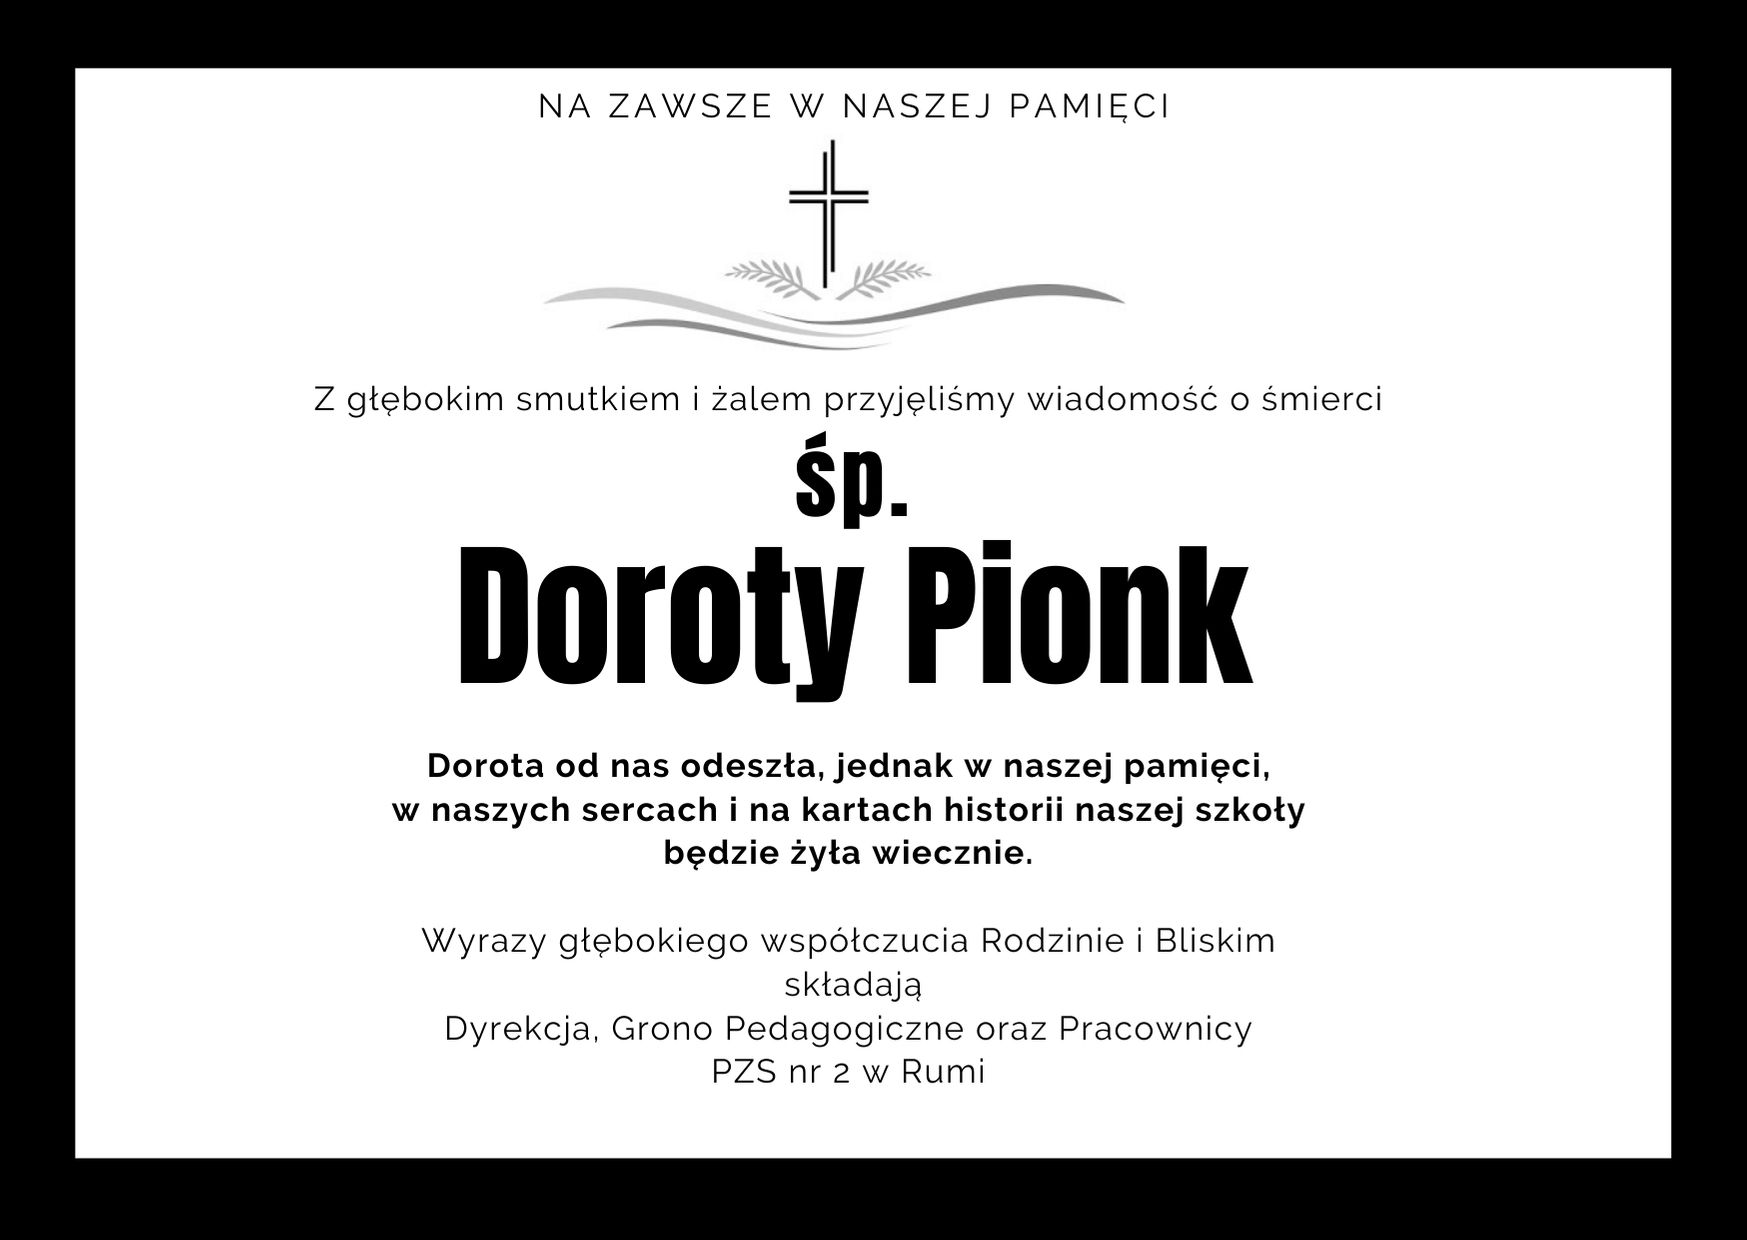 Dorota Pionk